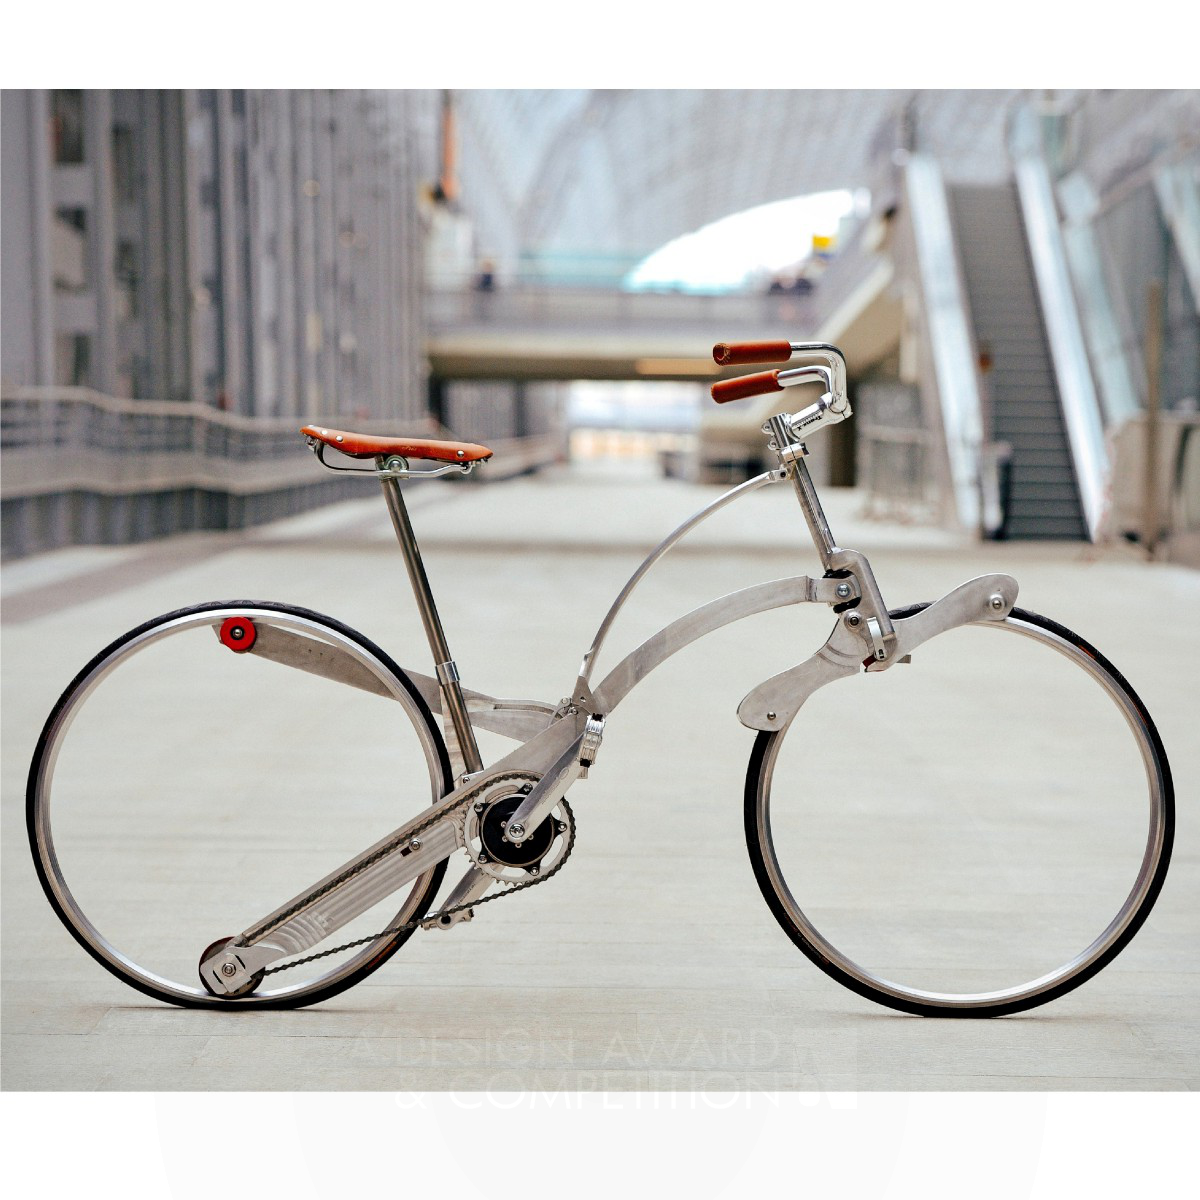 Gianluca Sada wins Golden at the prestigious A' Vehicle, Mobility and Transportation Design Award with Sada Bike Hubless Foldable Bike.